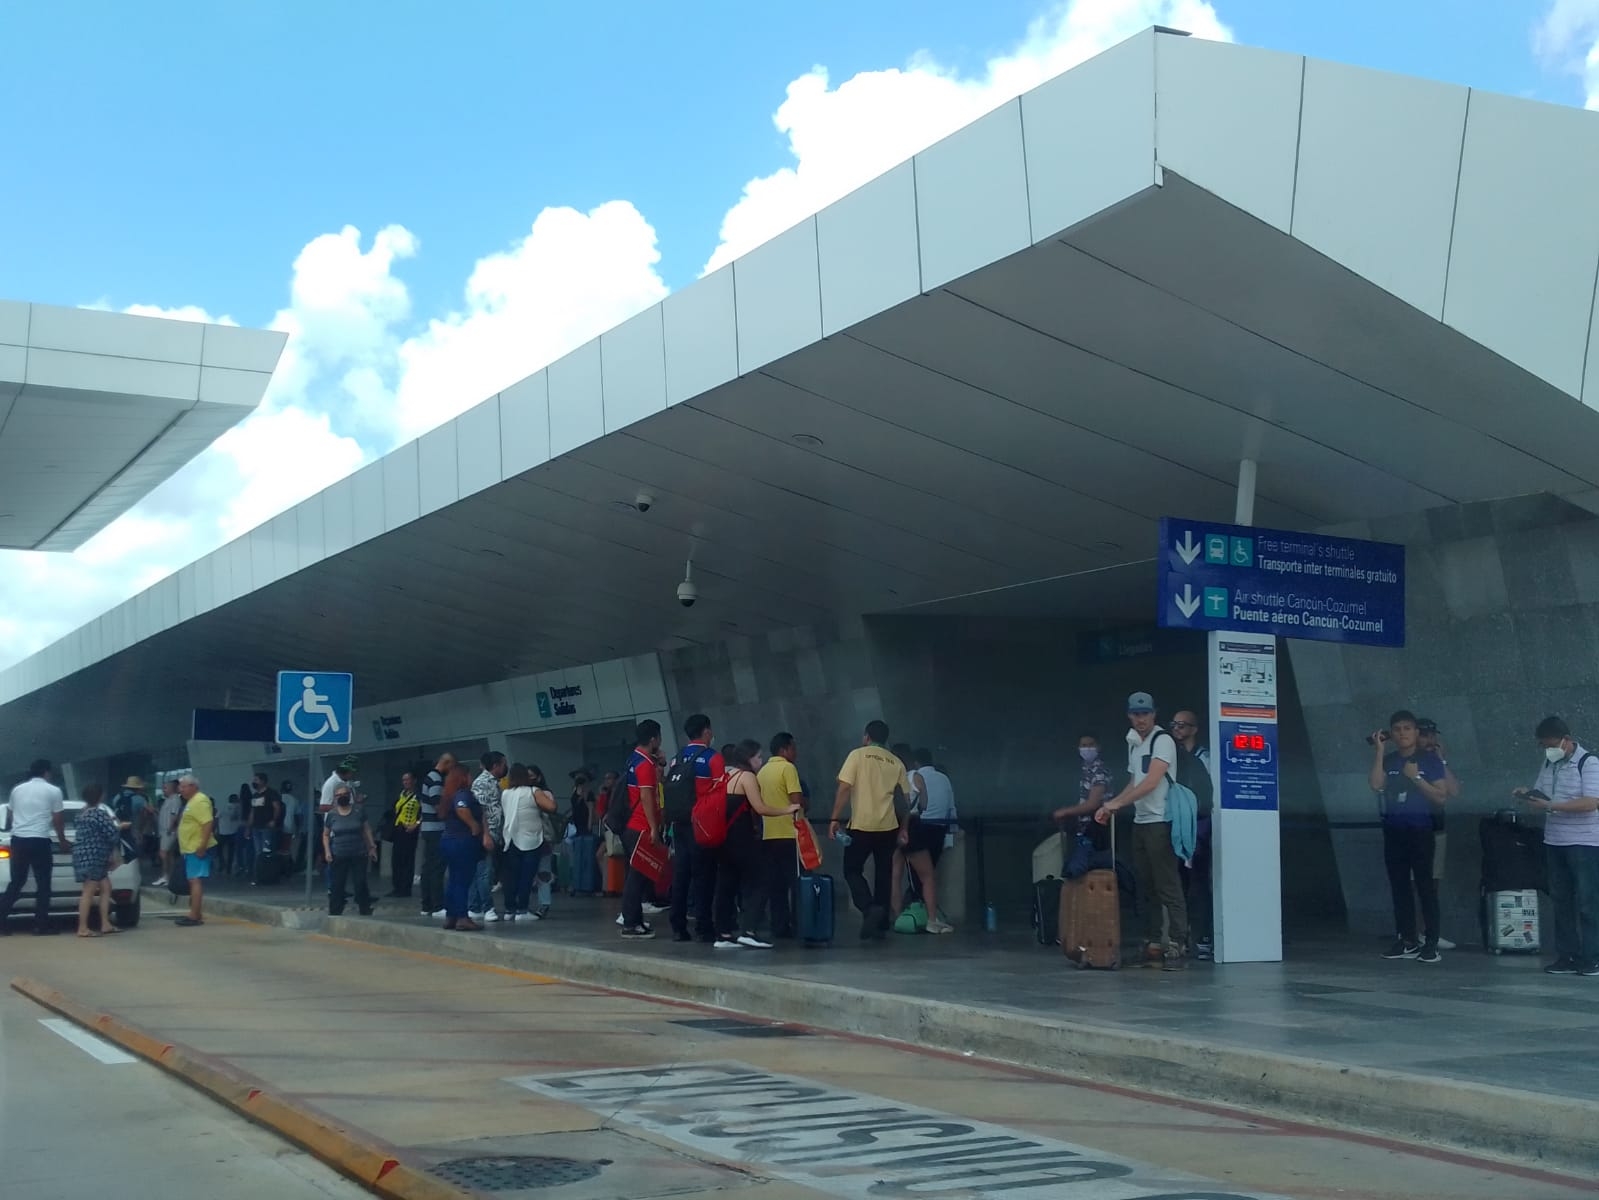 Cancelan vuelo directo a Bogotá en el aeropuerto de Cancún: VIDEO